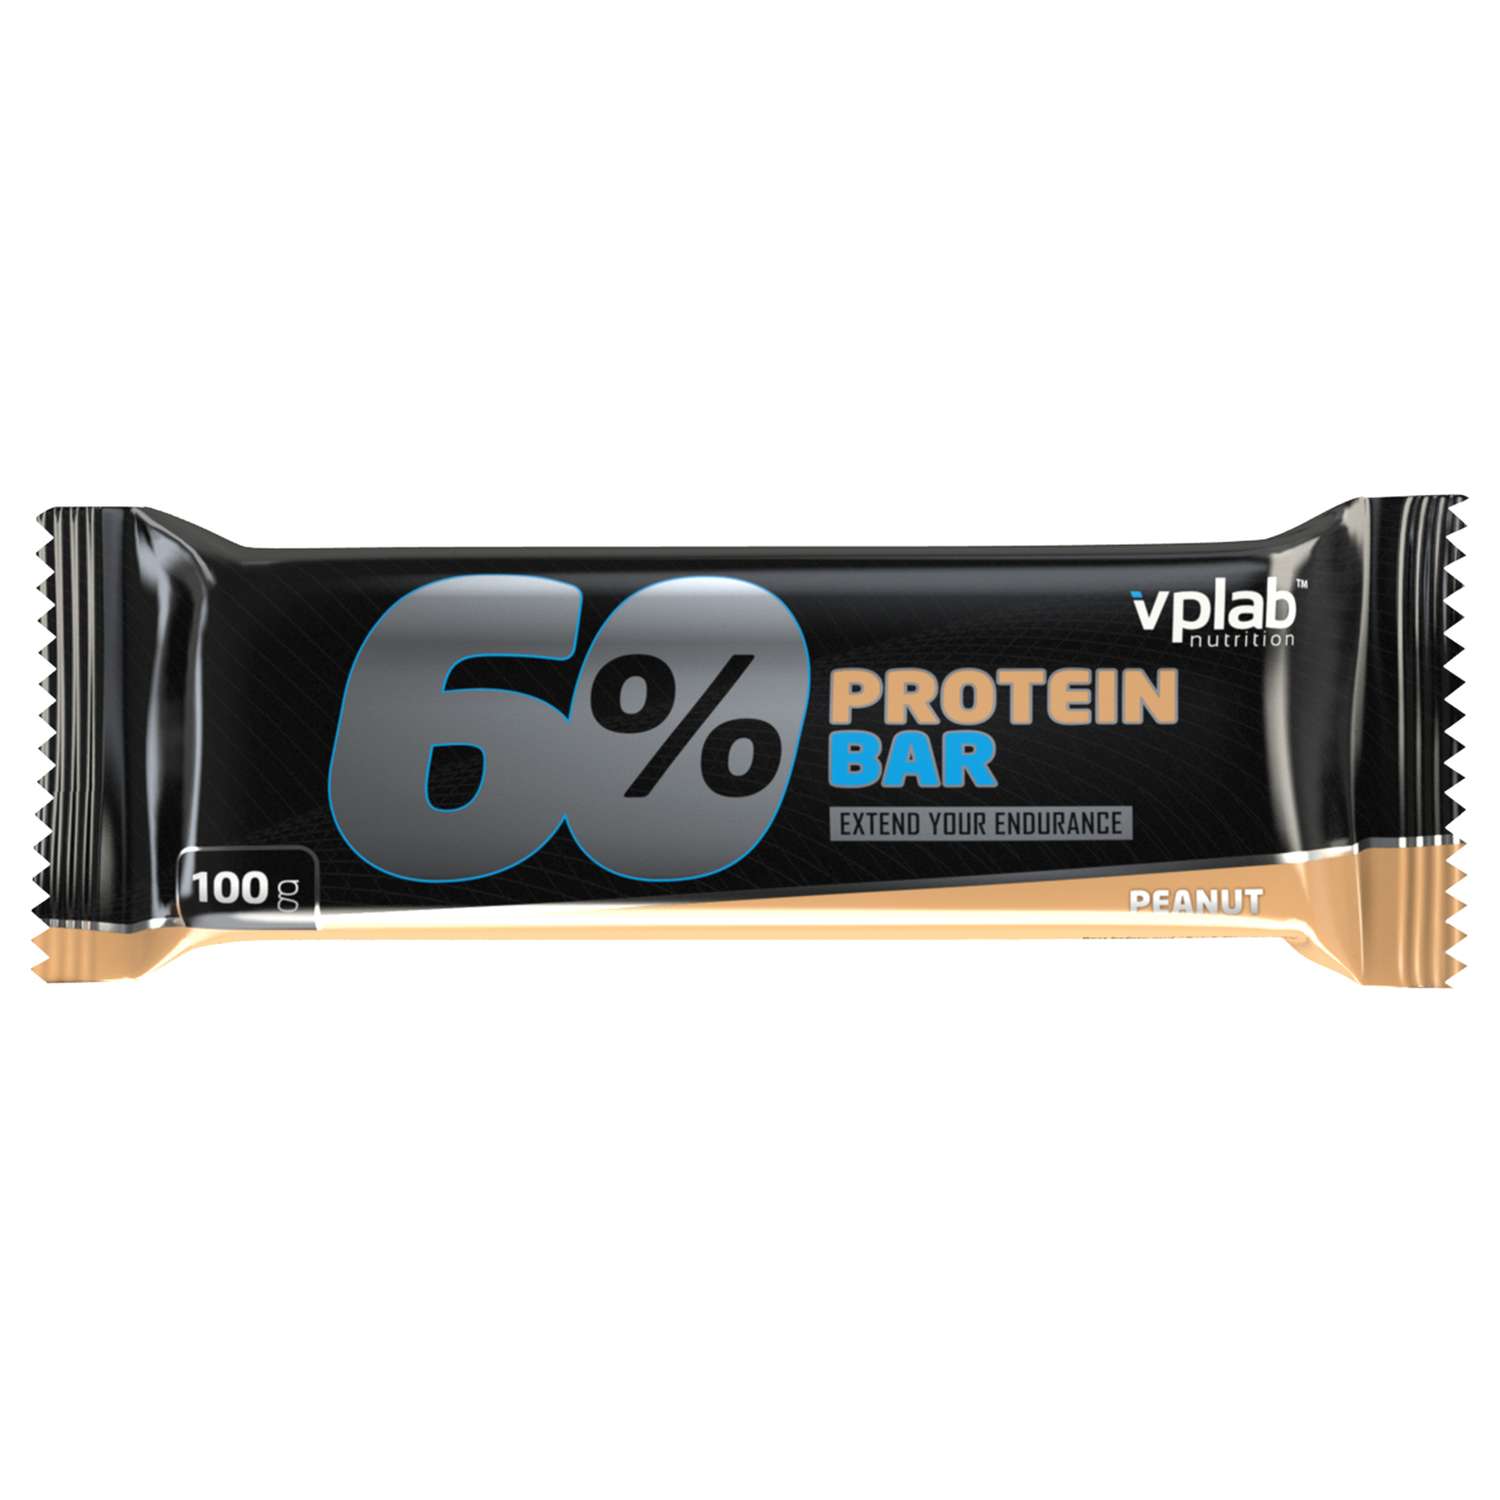 Батончик VPLAB Protein bar 60% арахис 100г - фото 1